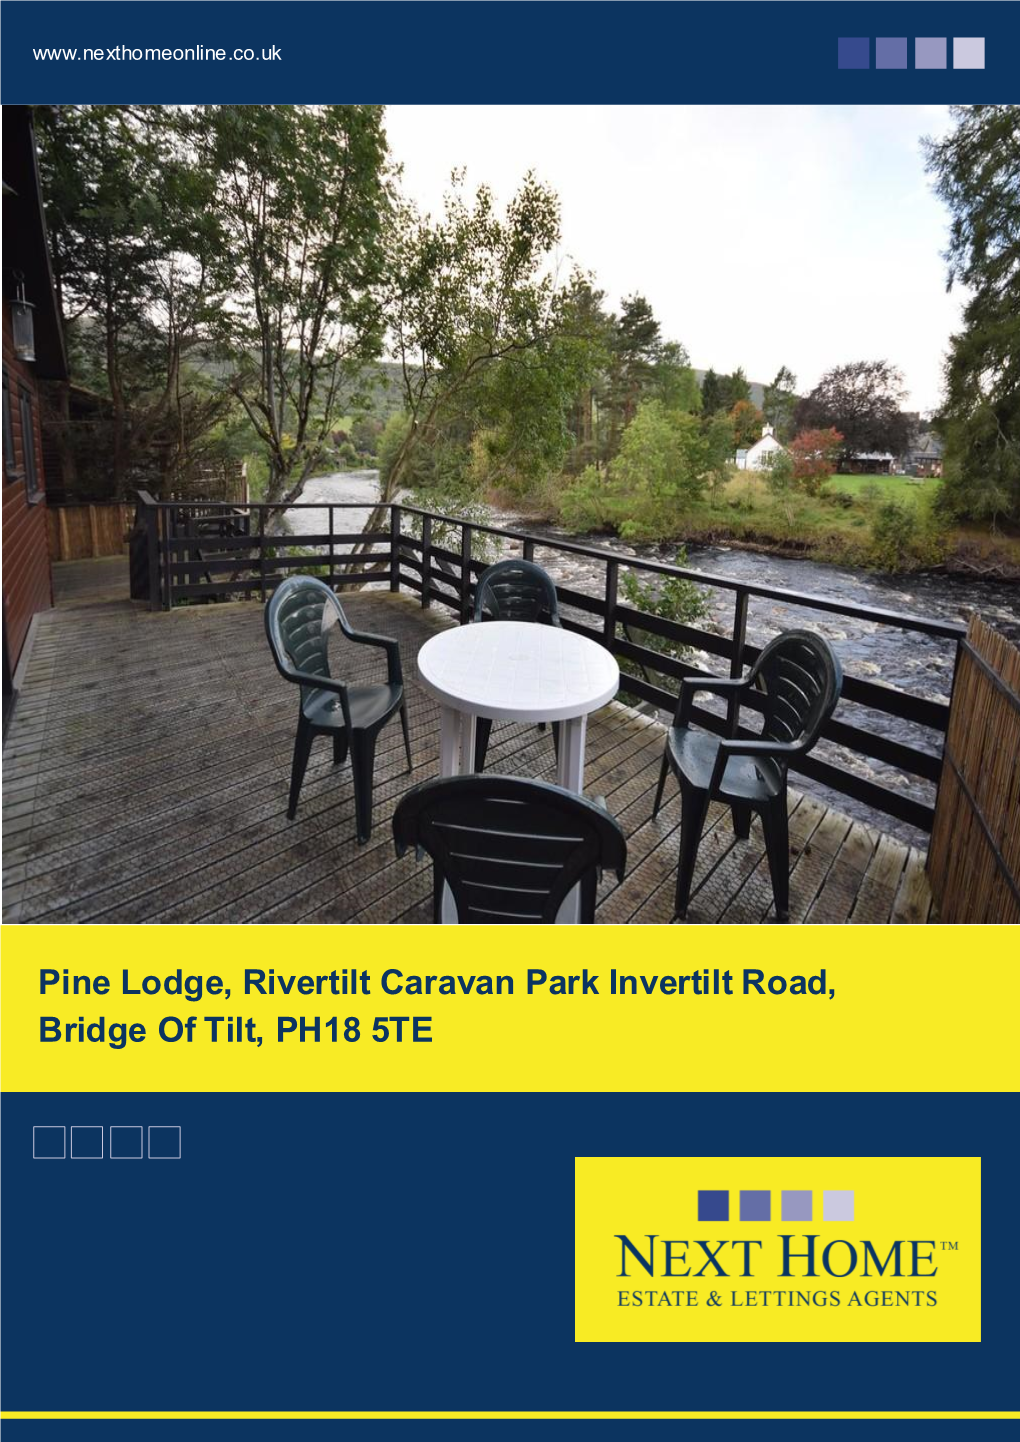 Pine Lodge, Rivertilt Caravan Park Invertilt Road, Bridge of Tilt, PH18 5TE : Offers Over £86,000